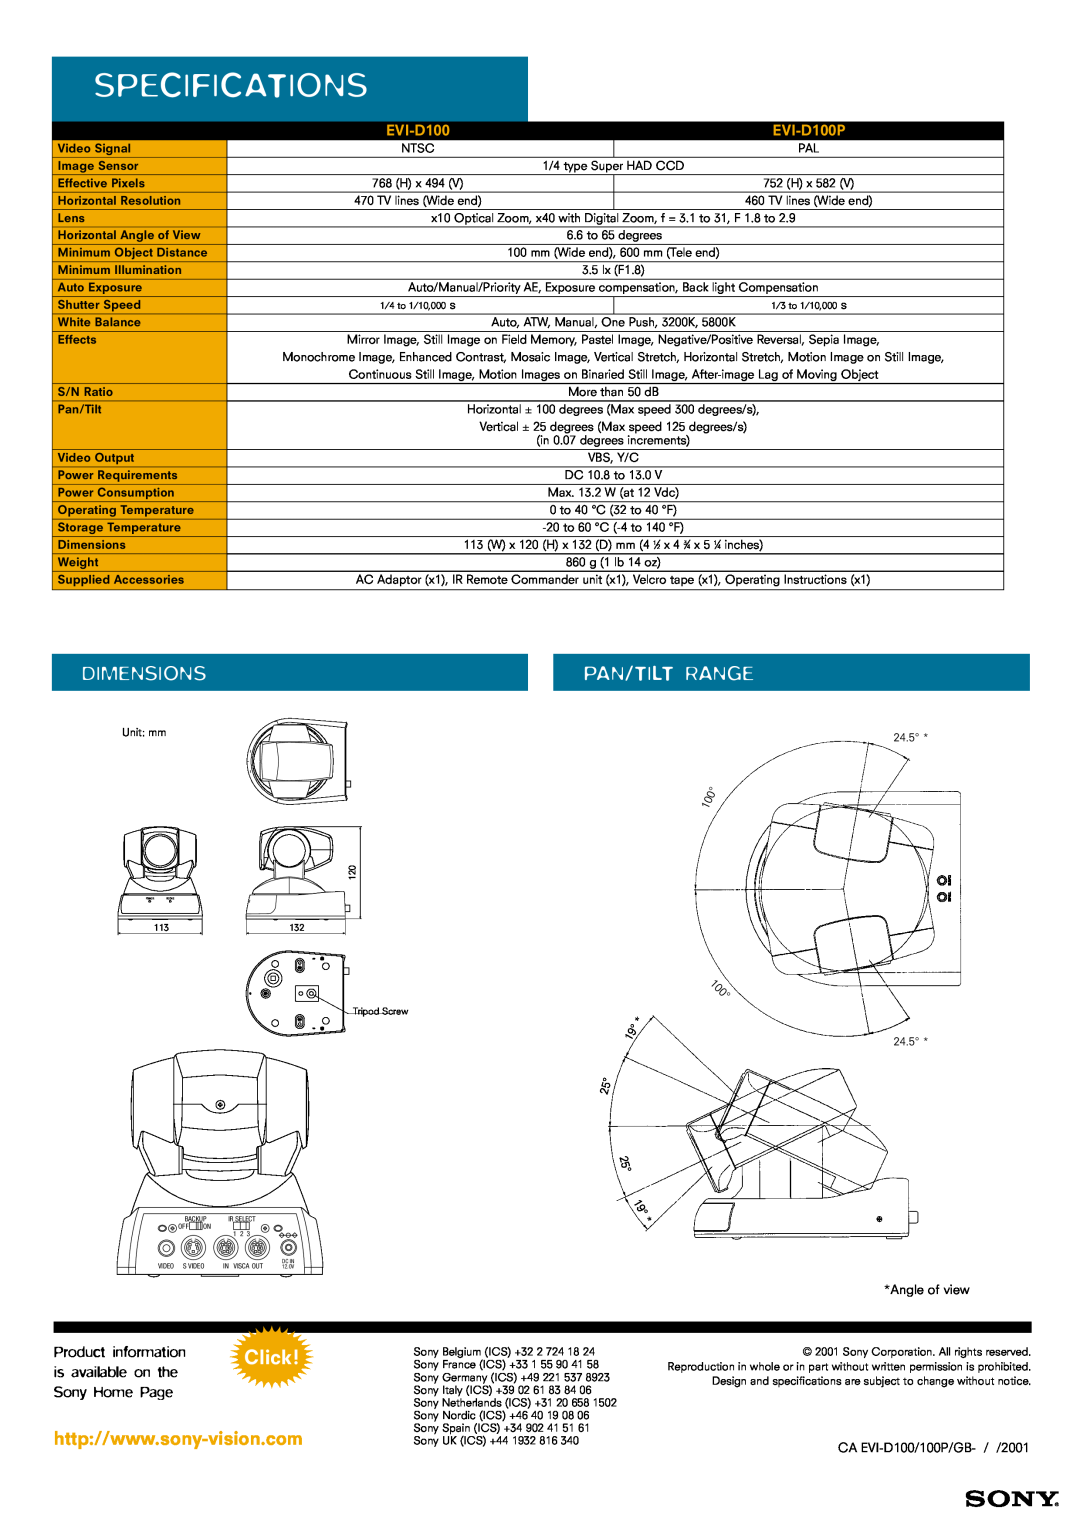 Sony manual Specifications, Dimensions, Pan/Tilt Range, Click, EVI-D100P 